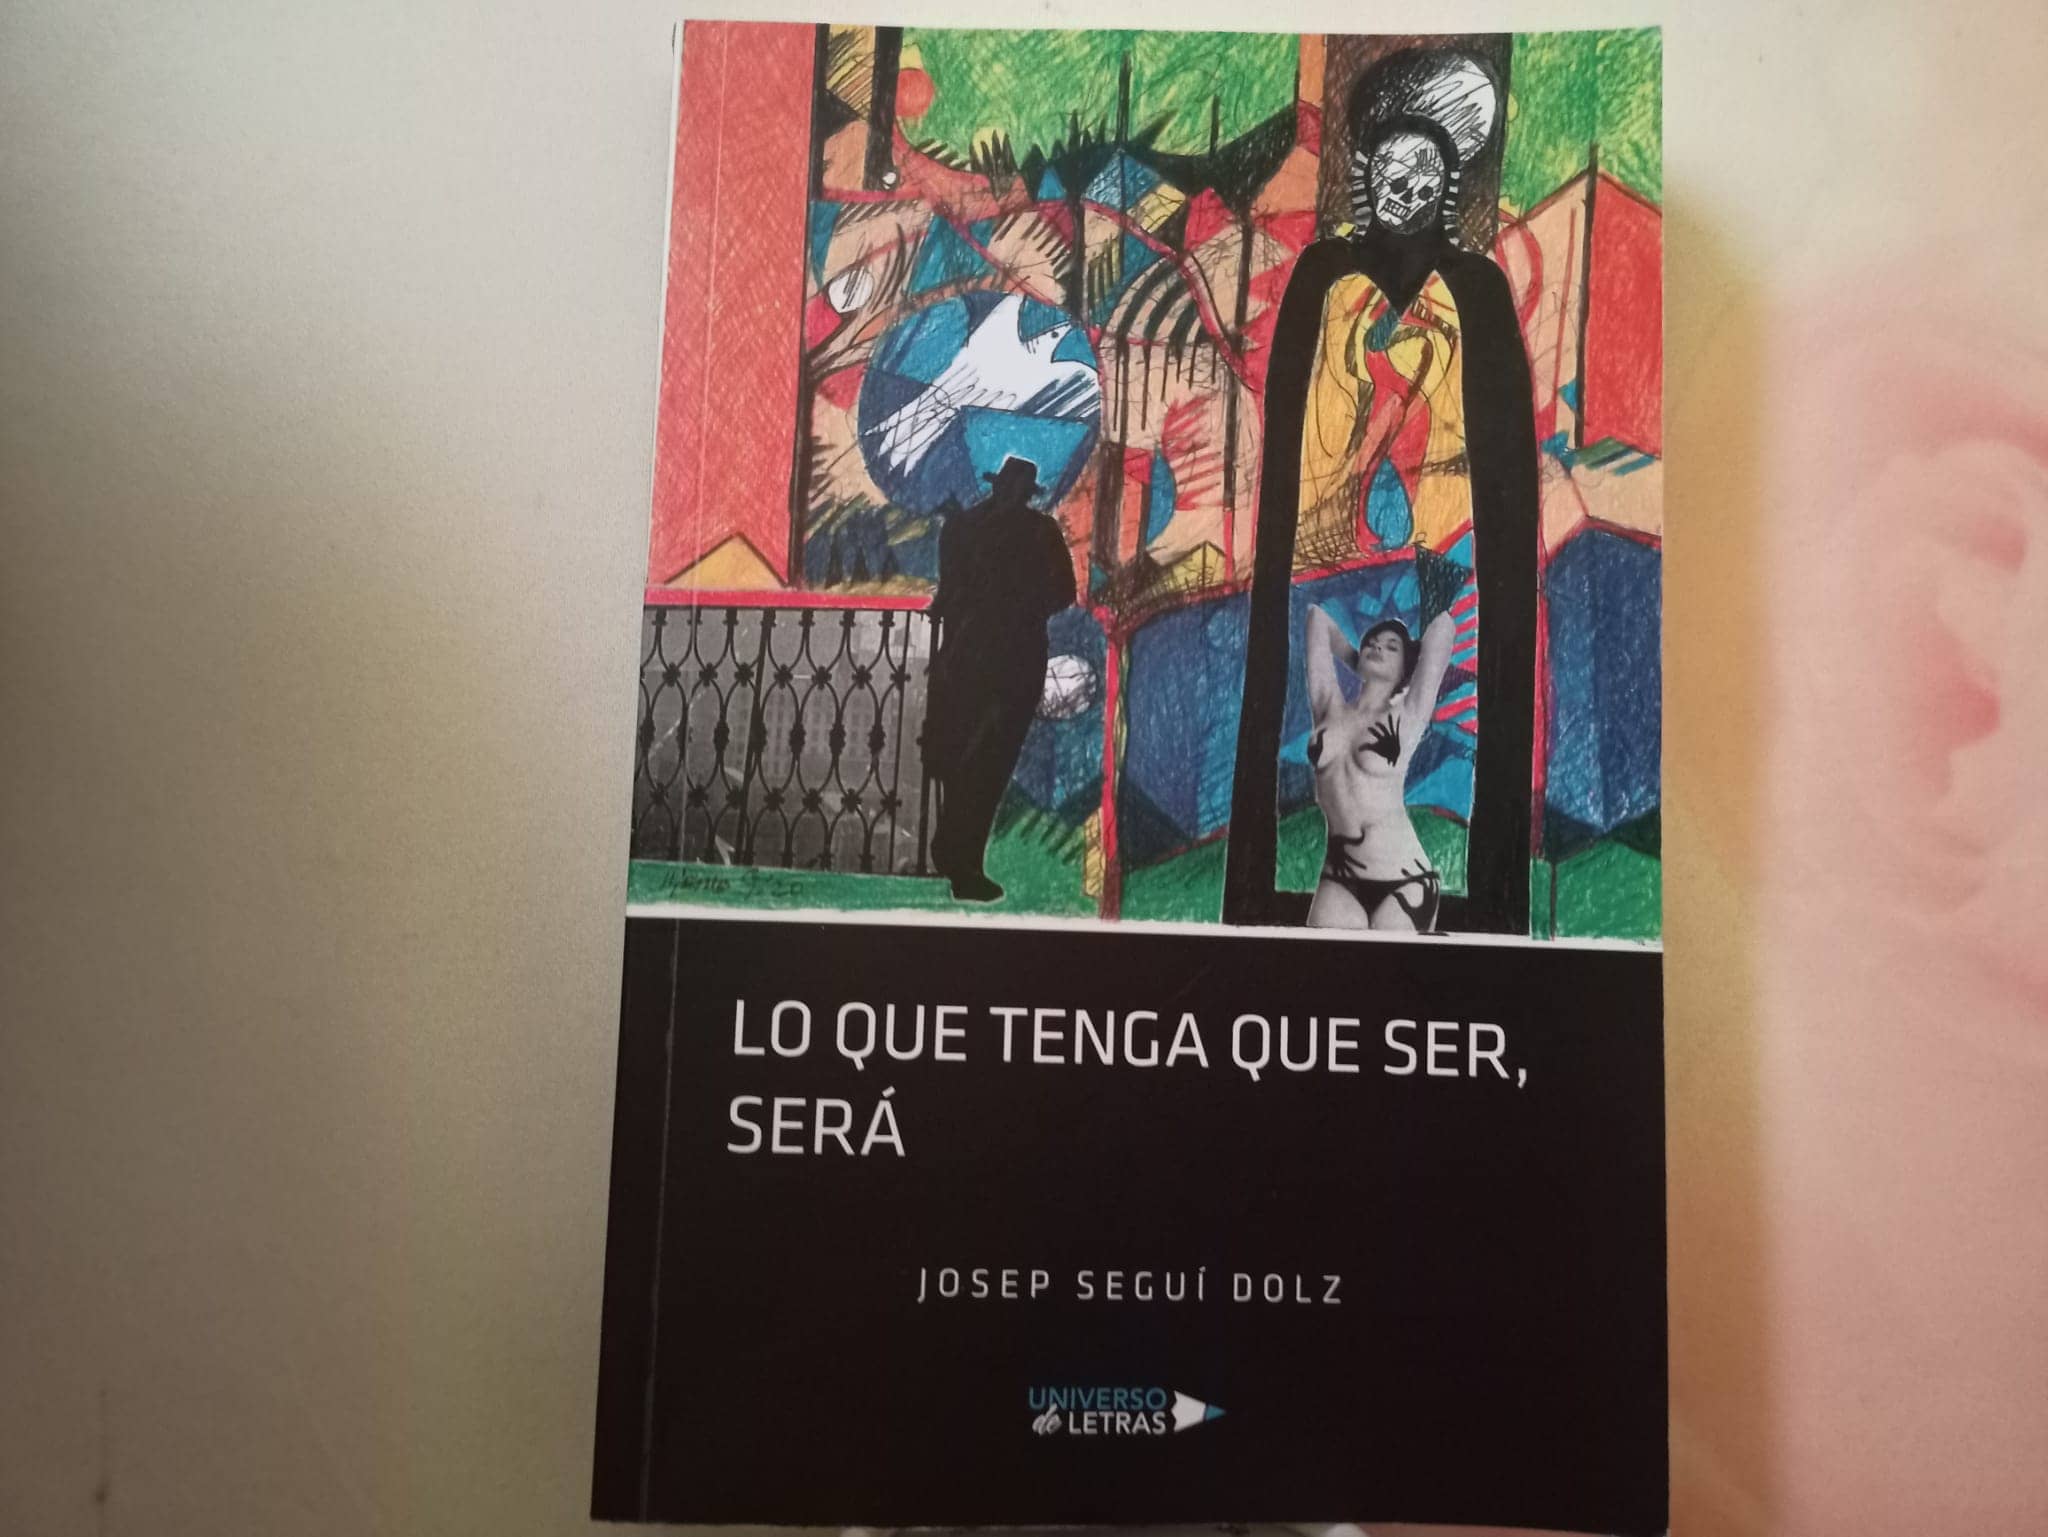 Reseña de “Lo que tenga que ser, será”, de Josep Seguí Dolz | Por Alicia Alarcón